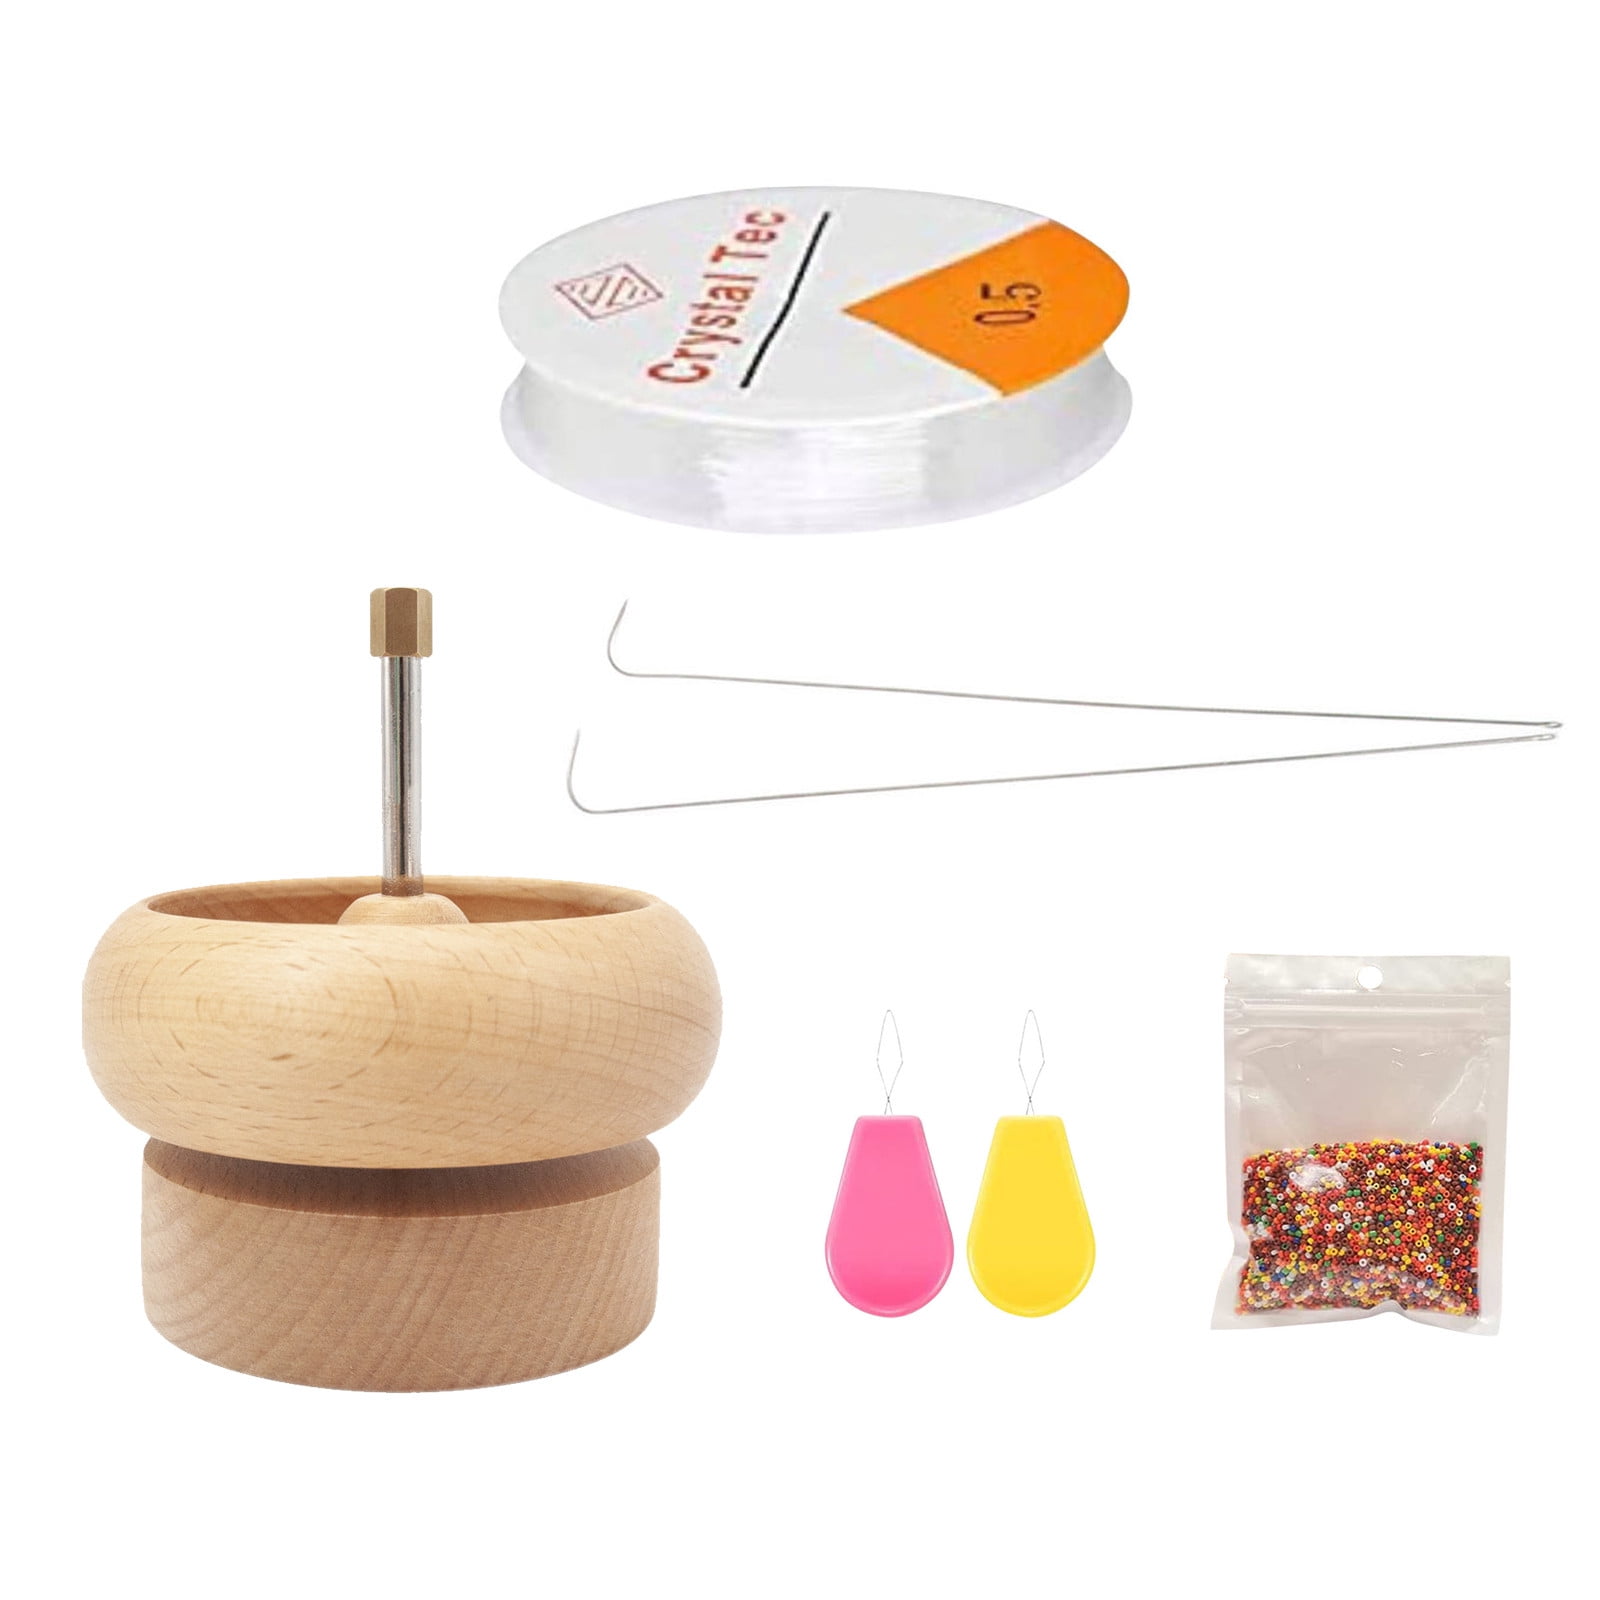 Bead Loom Kit Electric Bead Spinner With String Big Eye - Temu Austria